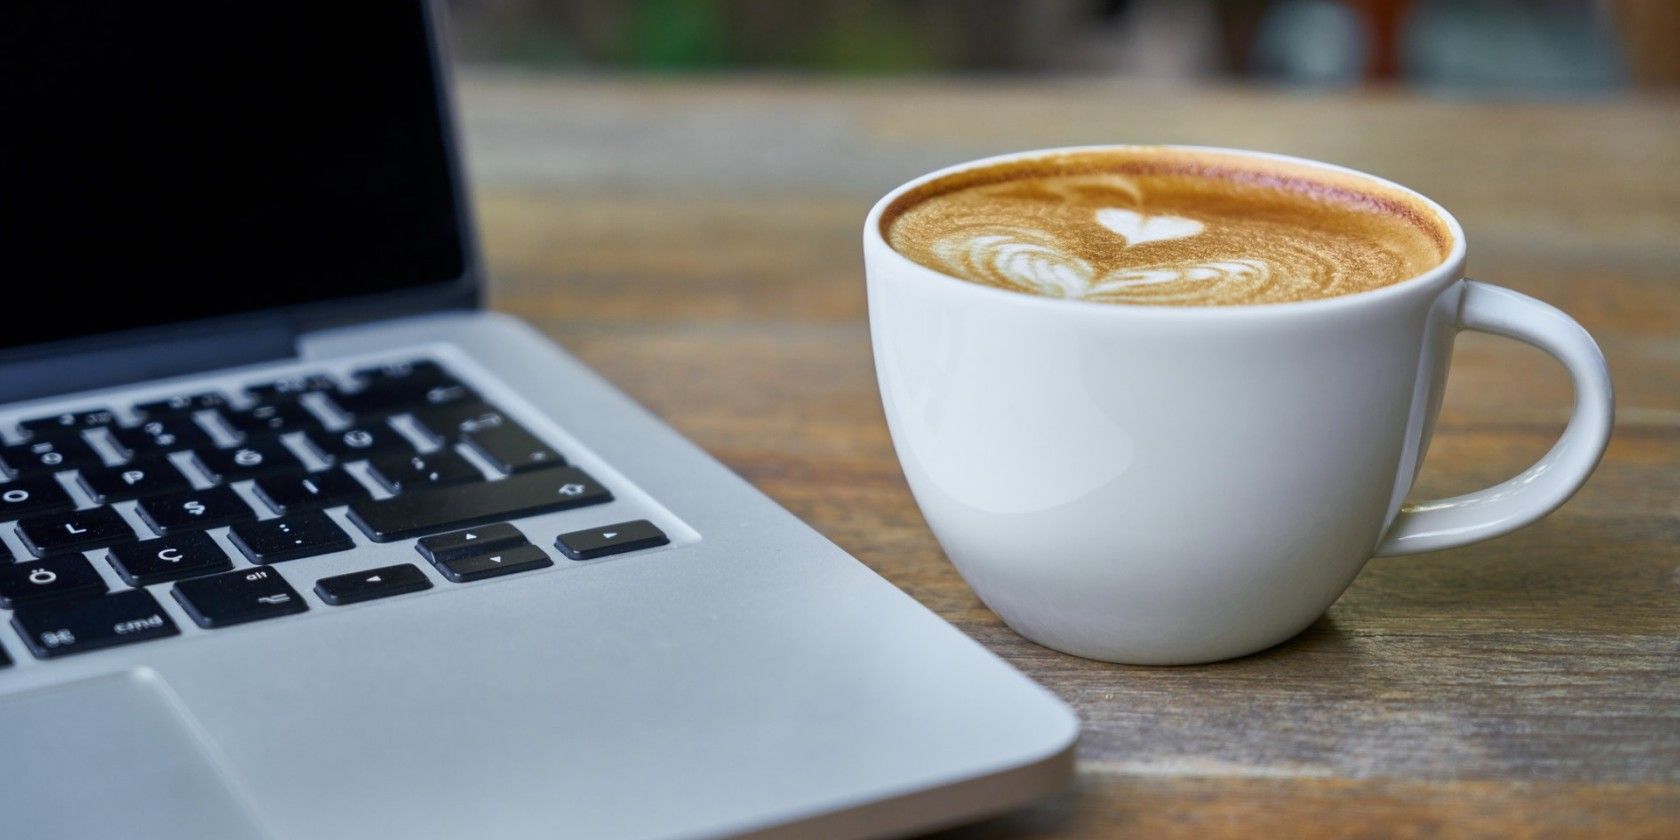 Macbook with latte